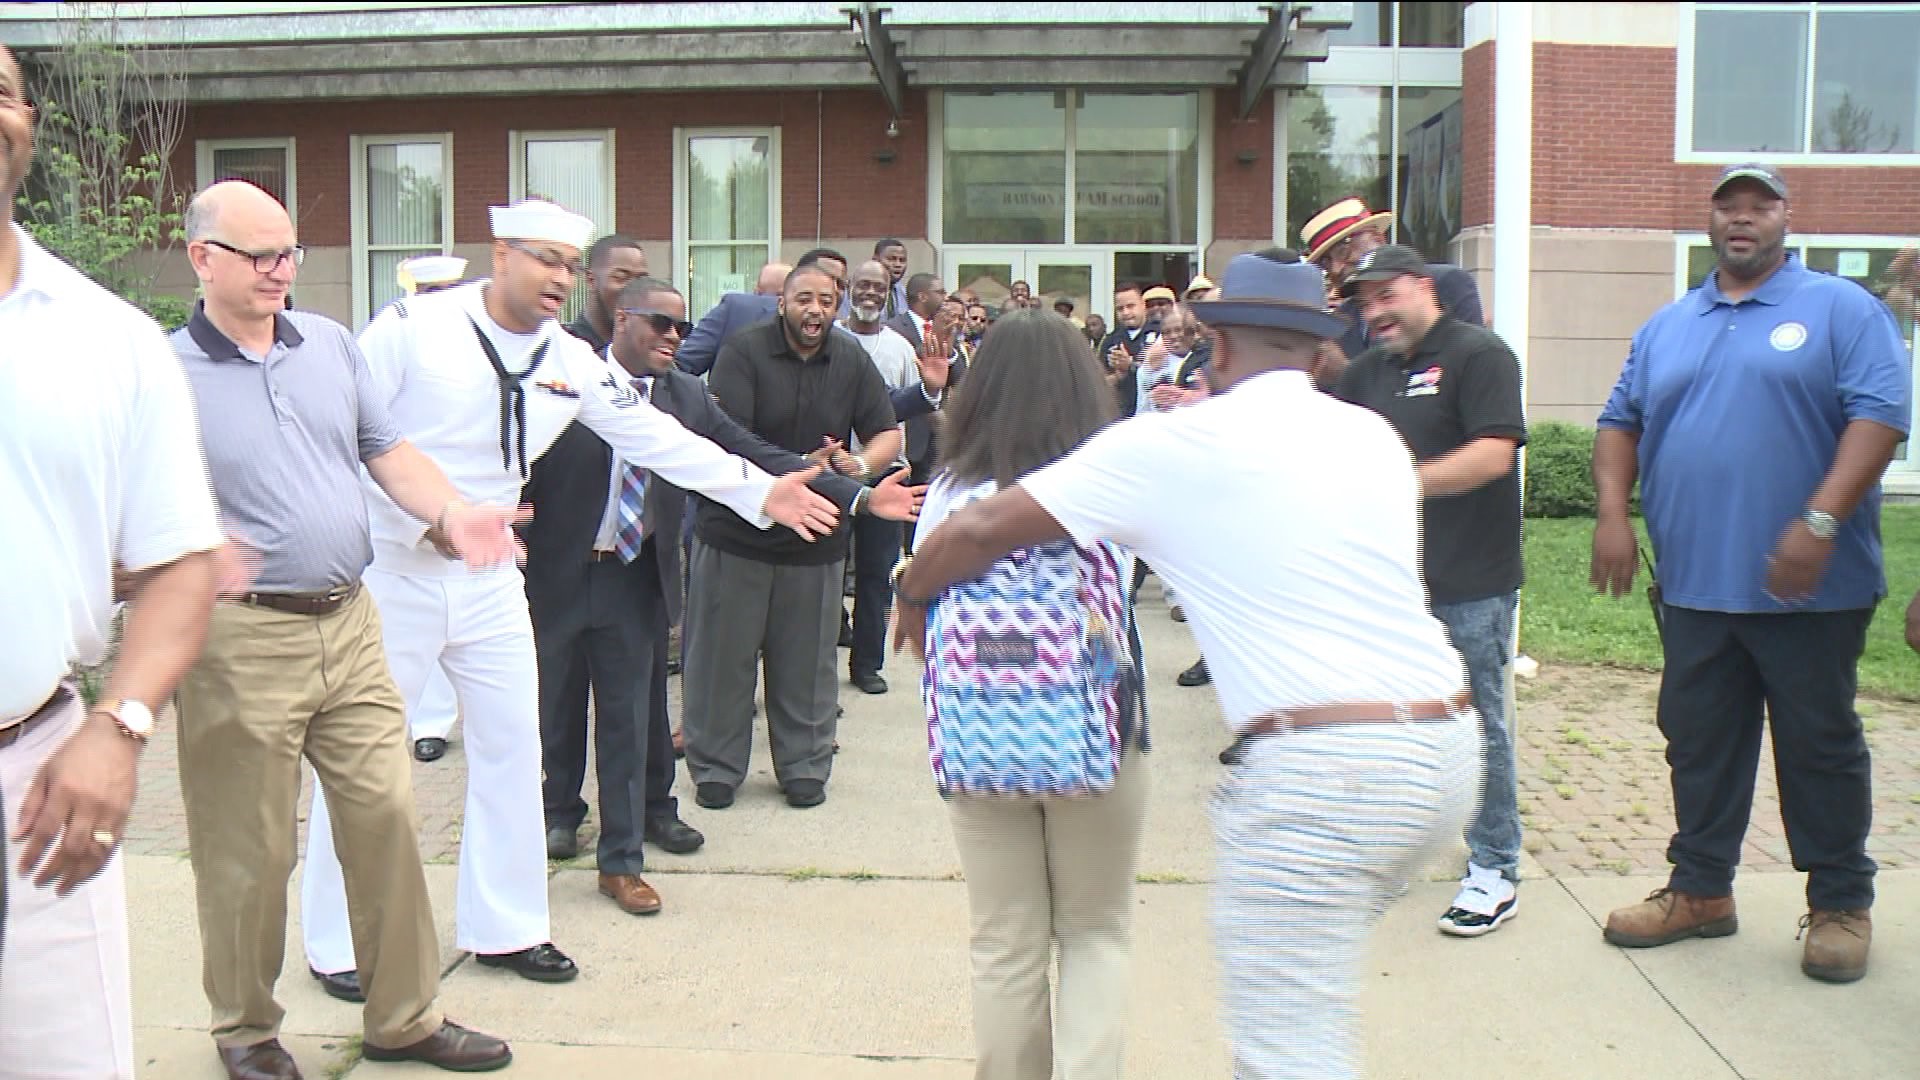 Community members greeting students at Hartford`s Rawson Elementary